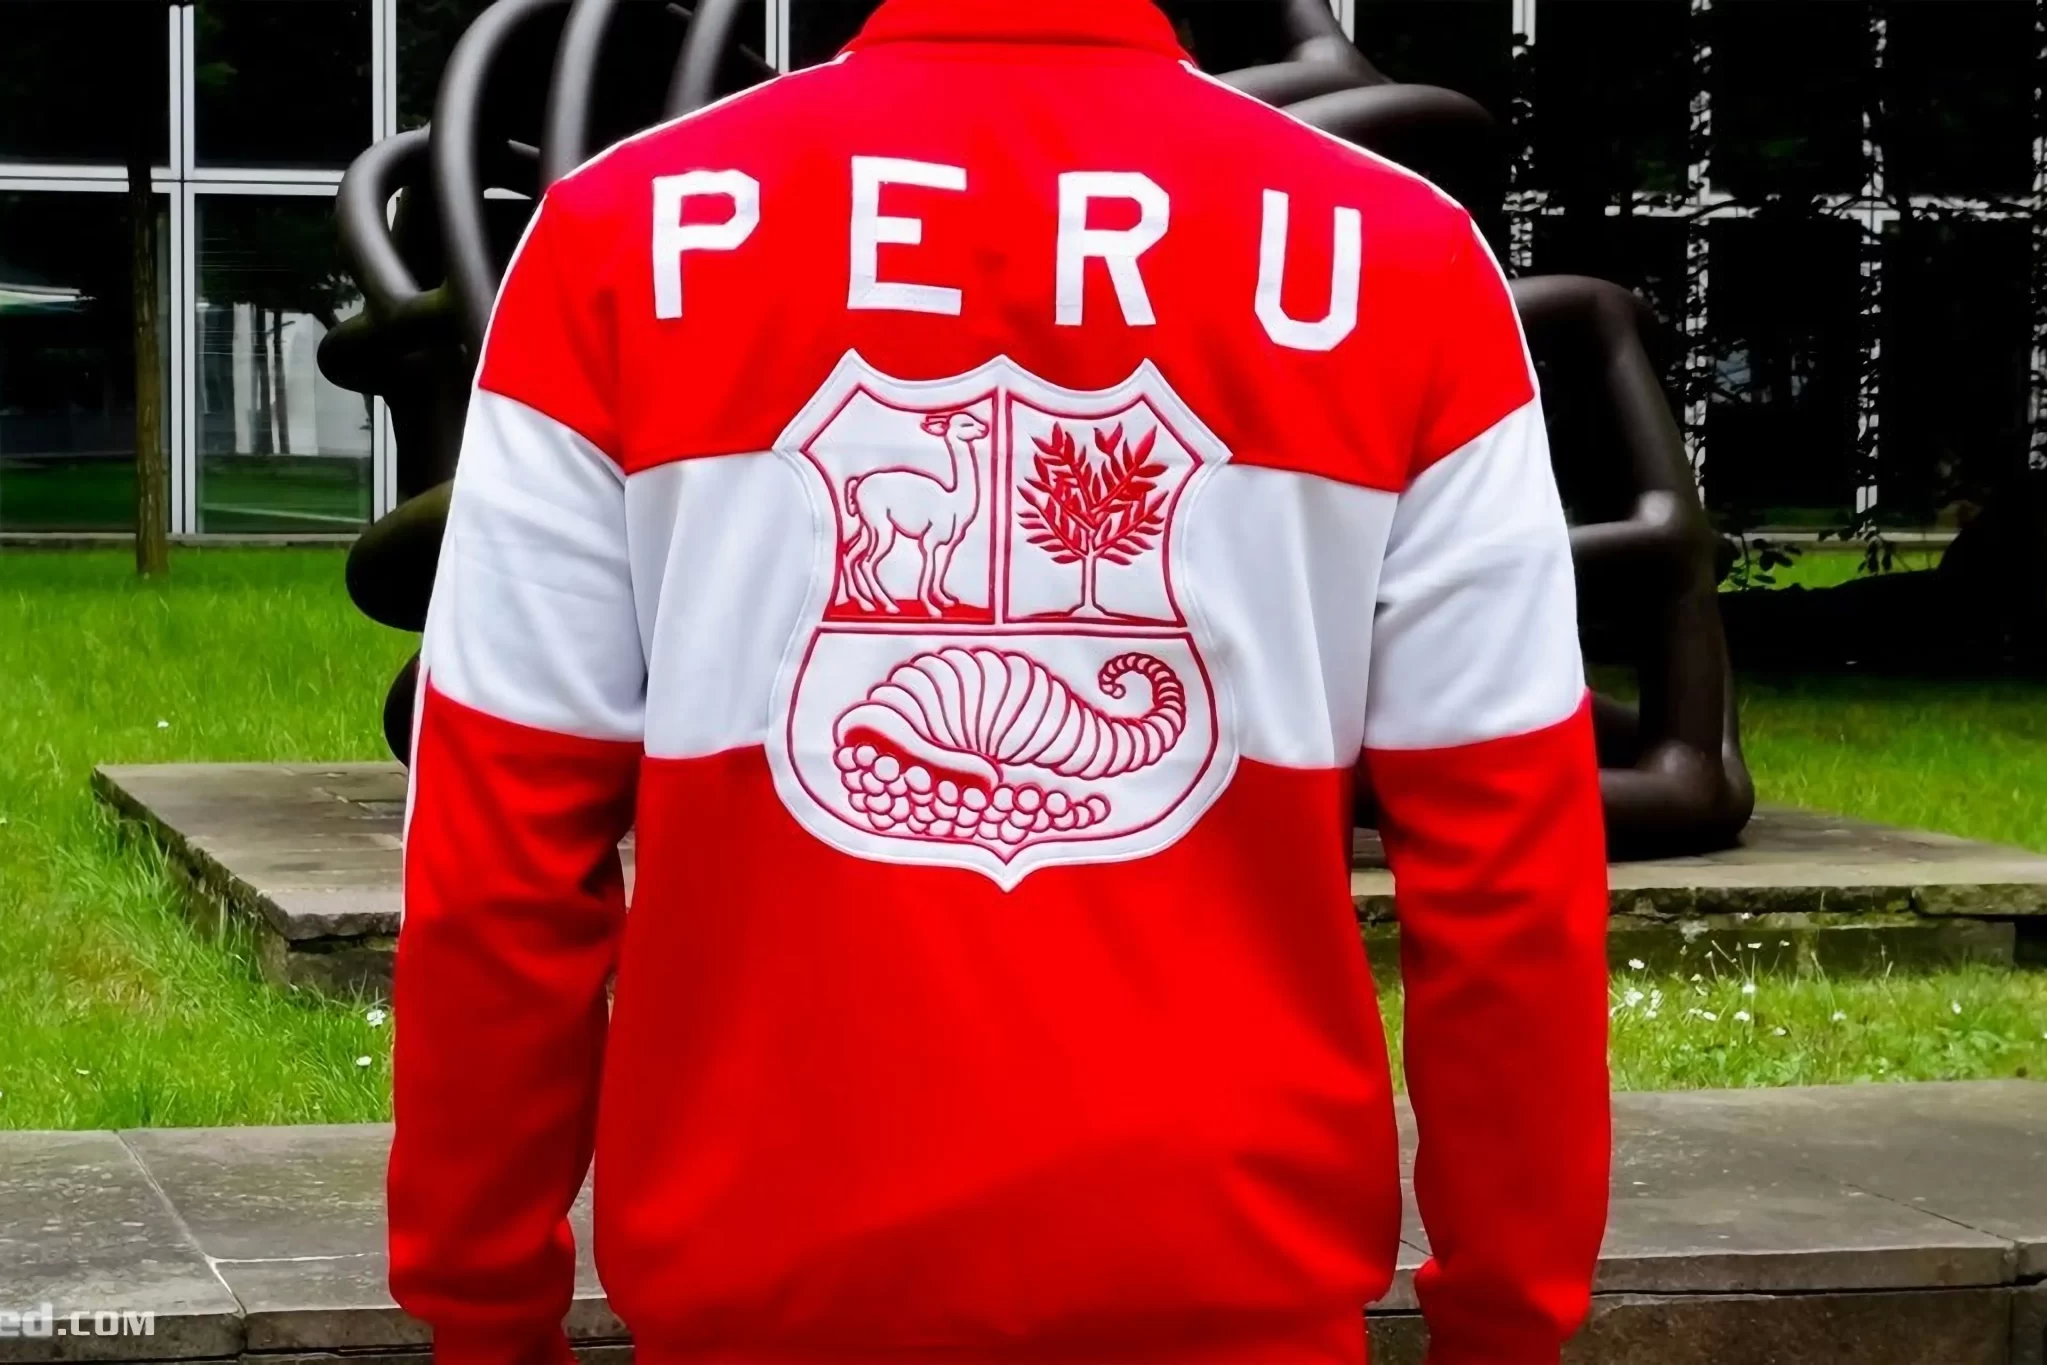 Men’s 2007 Peru Track Top by Adidas Originals: Graceful (EnLawded.com file #lmc4oy9h9x7deox5tvc)